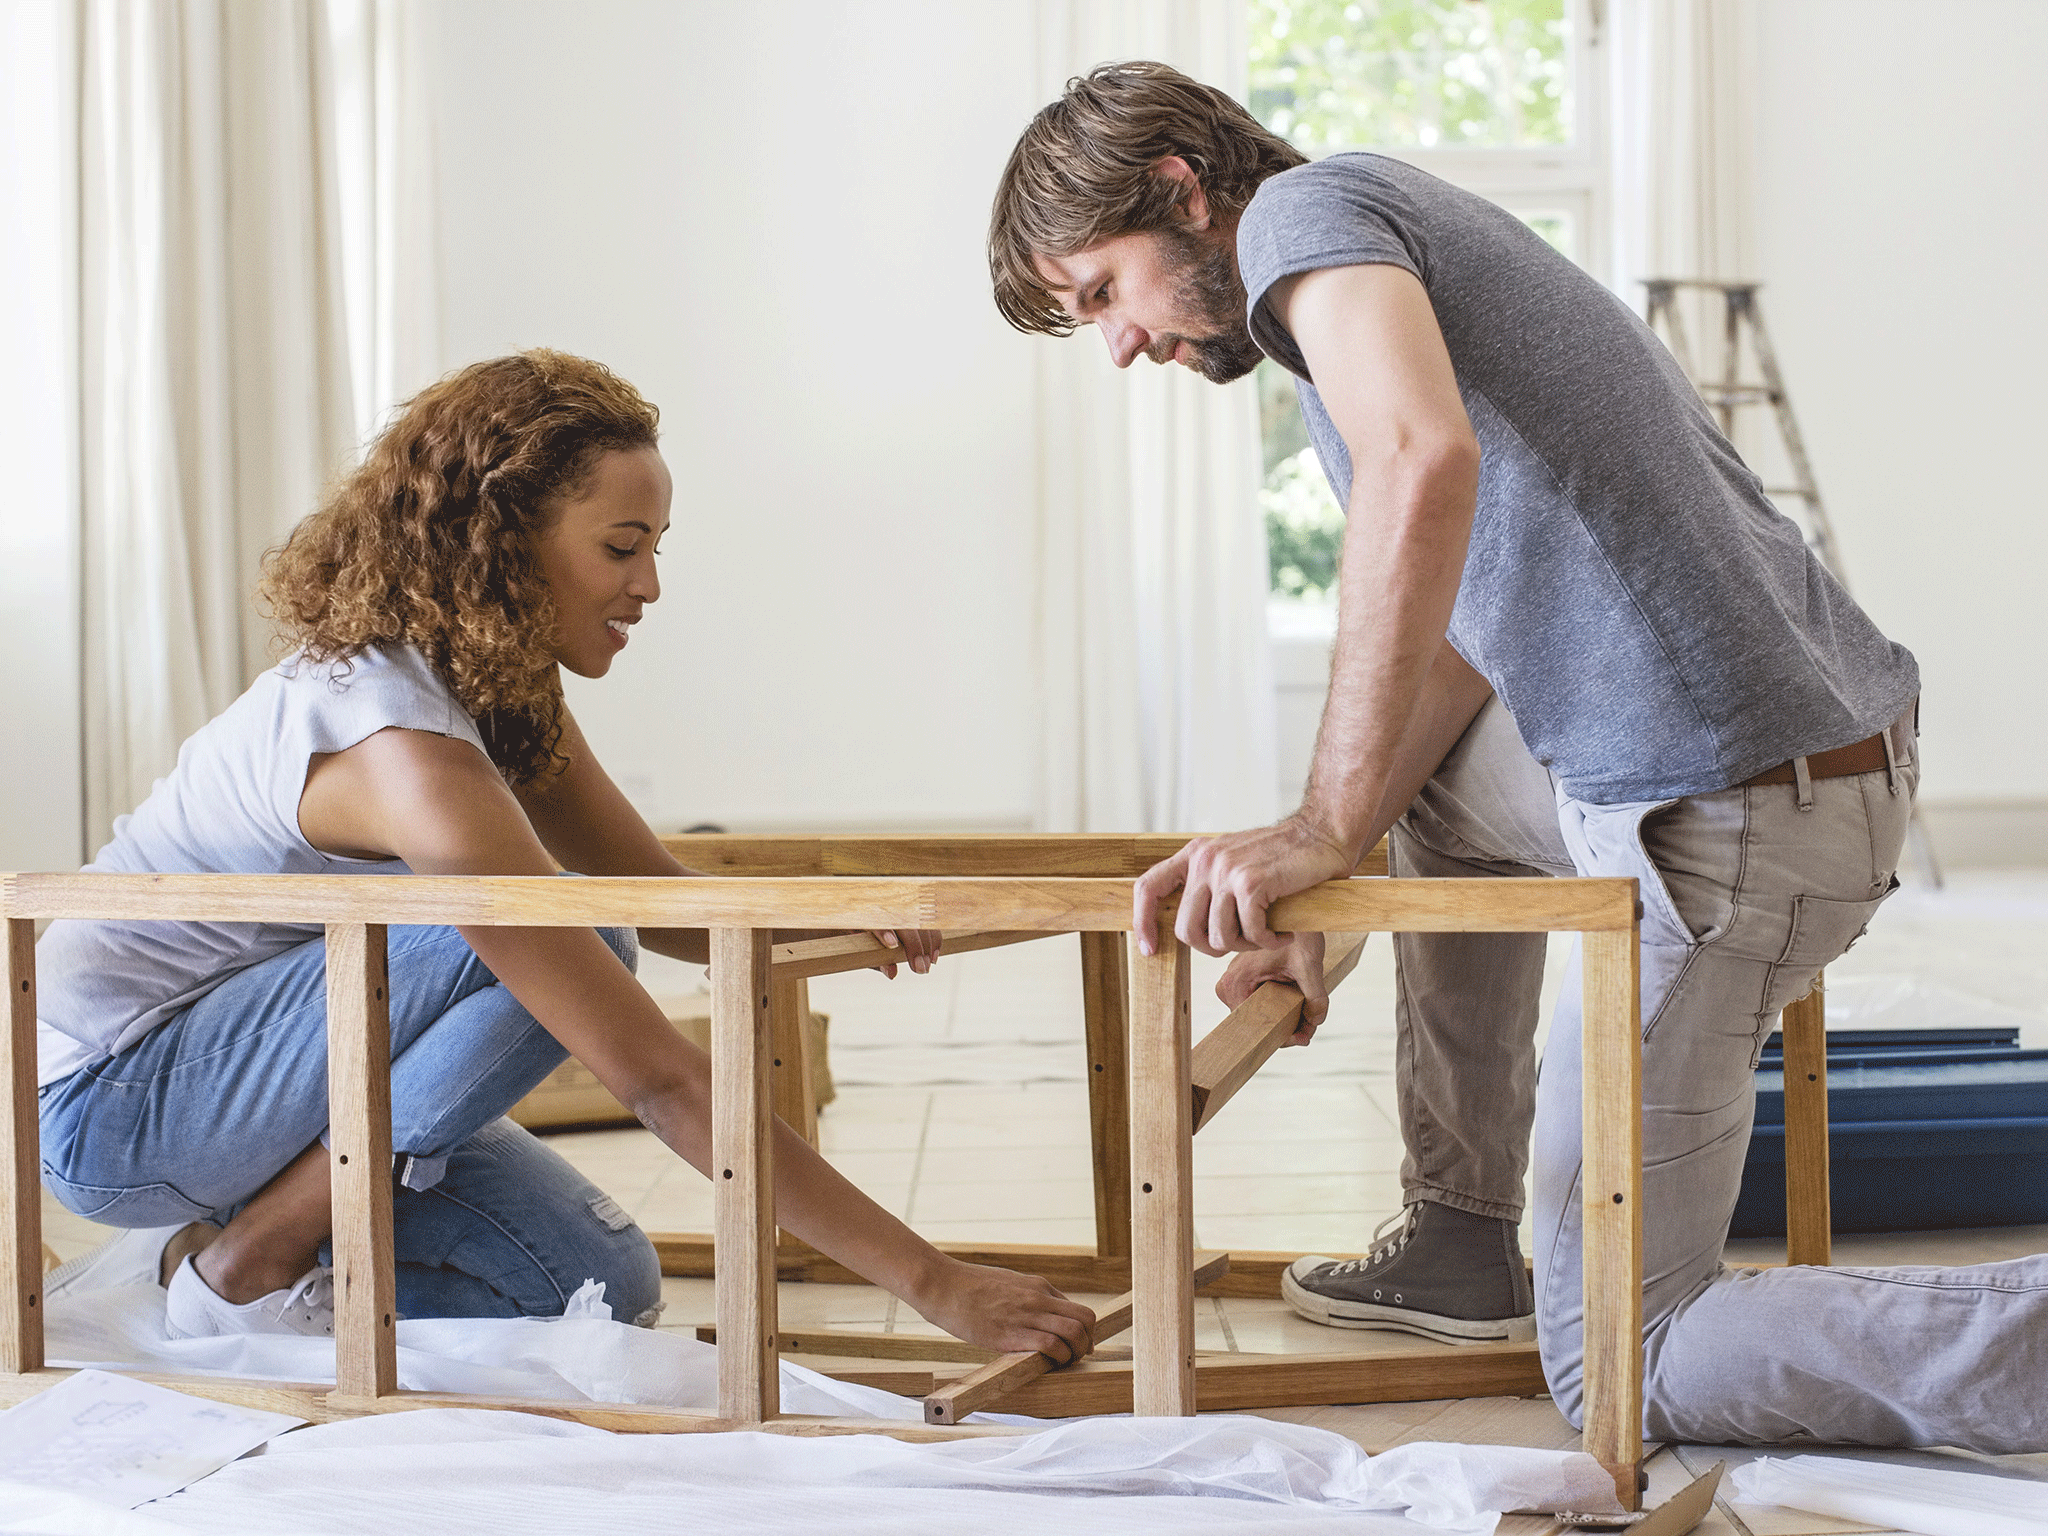 Men Are Better At Assembling Flat Pack Furniture Than Women Say